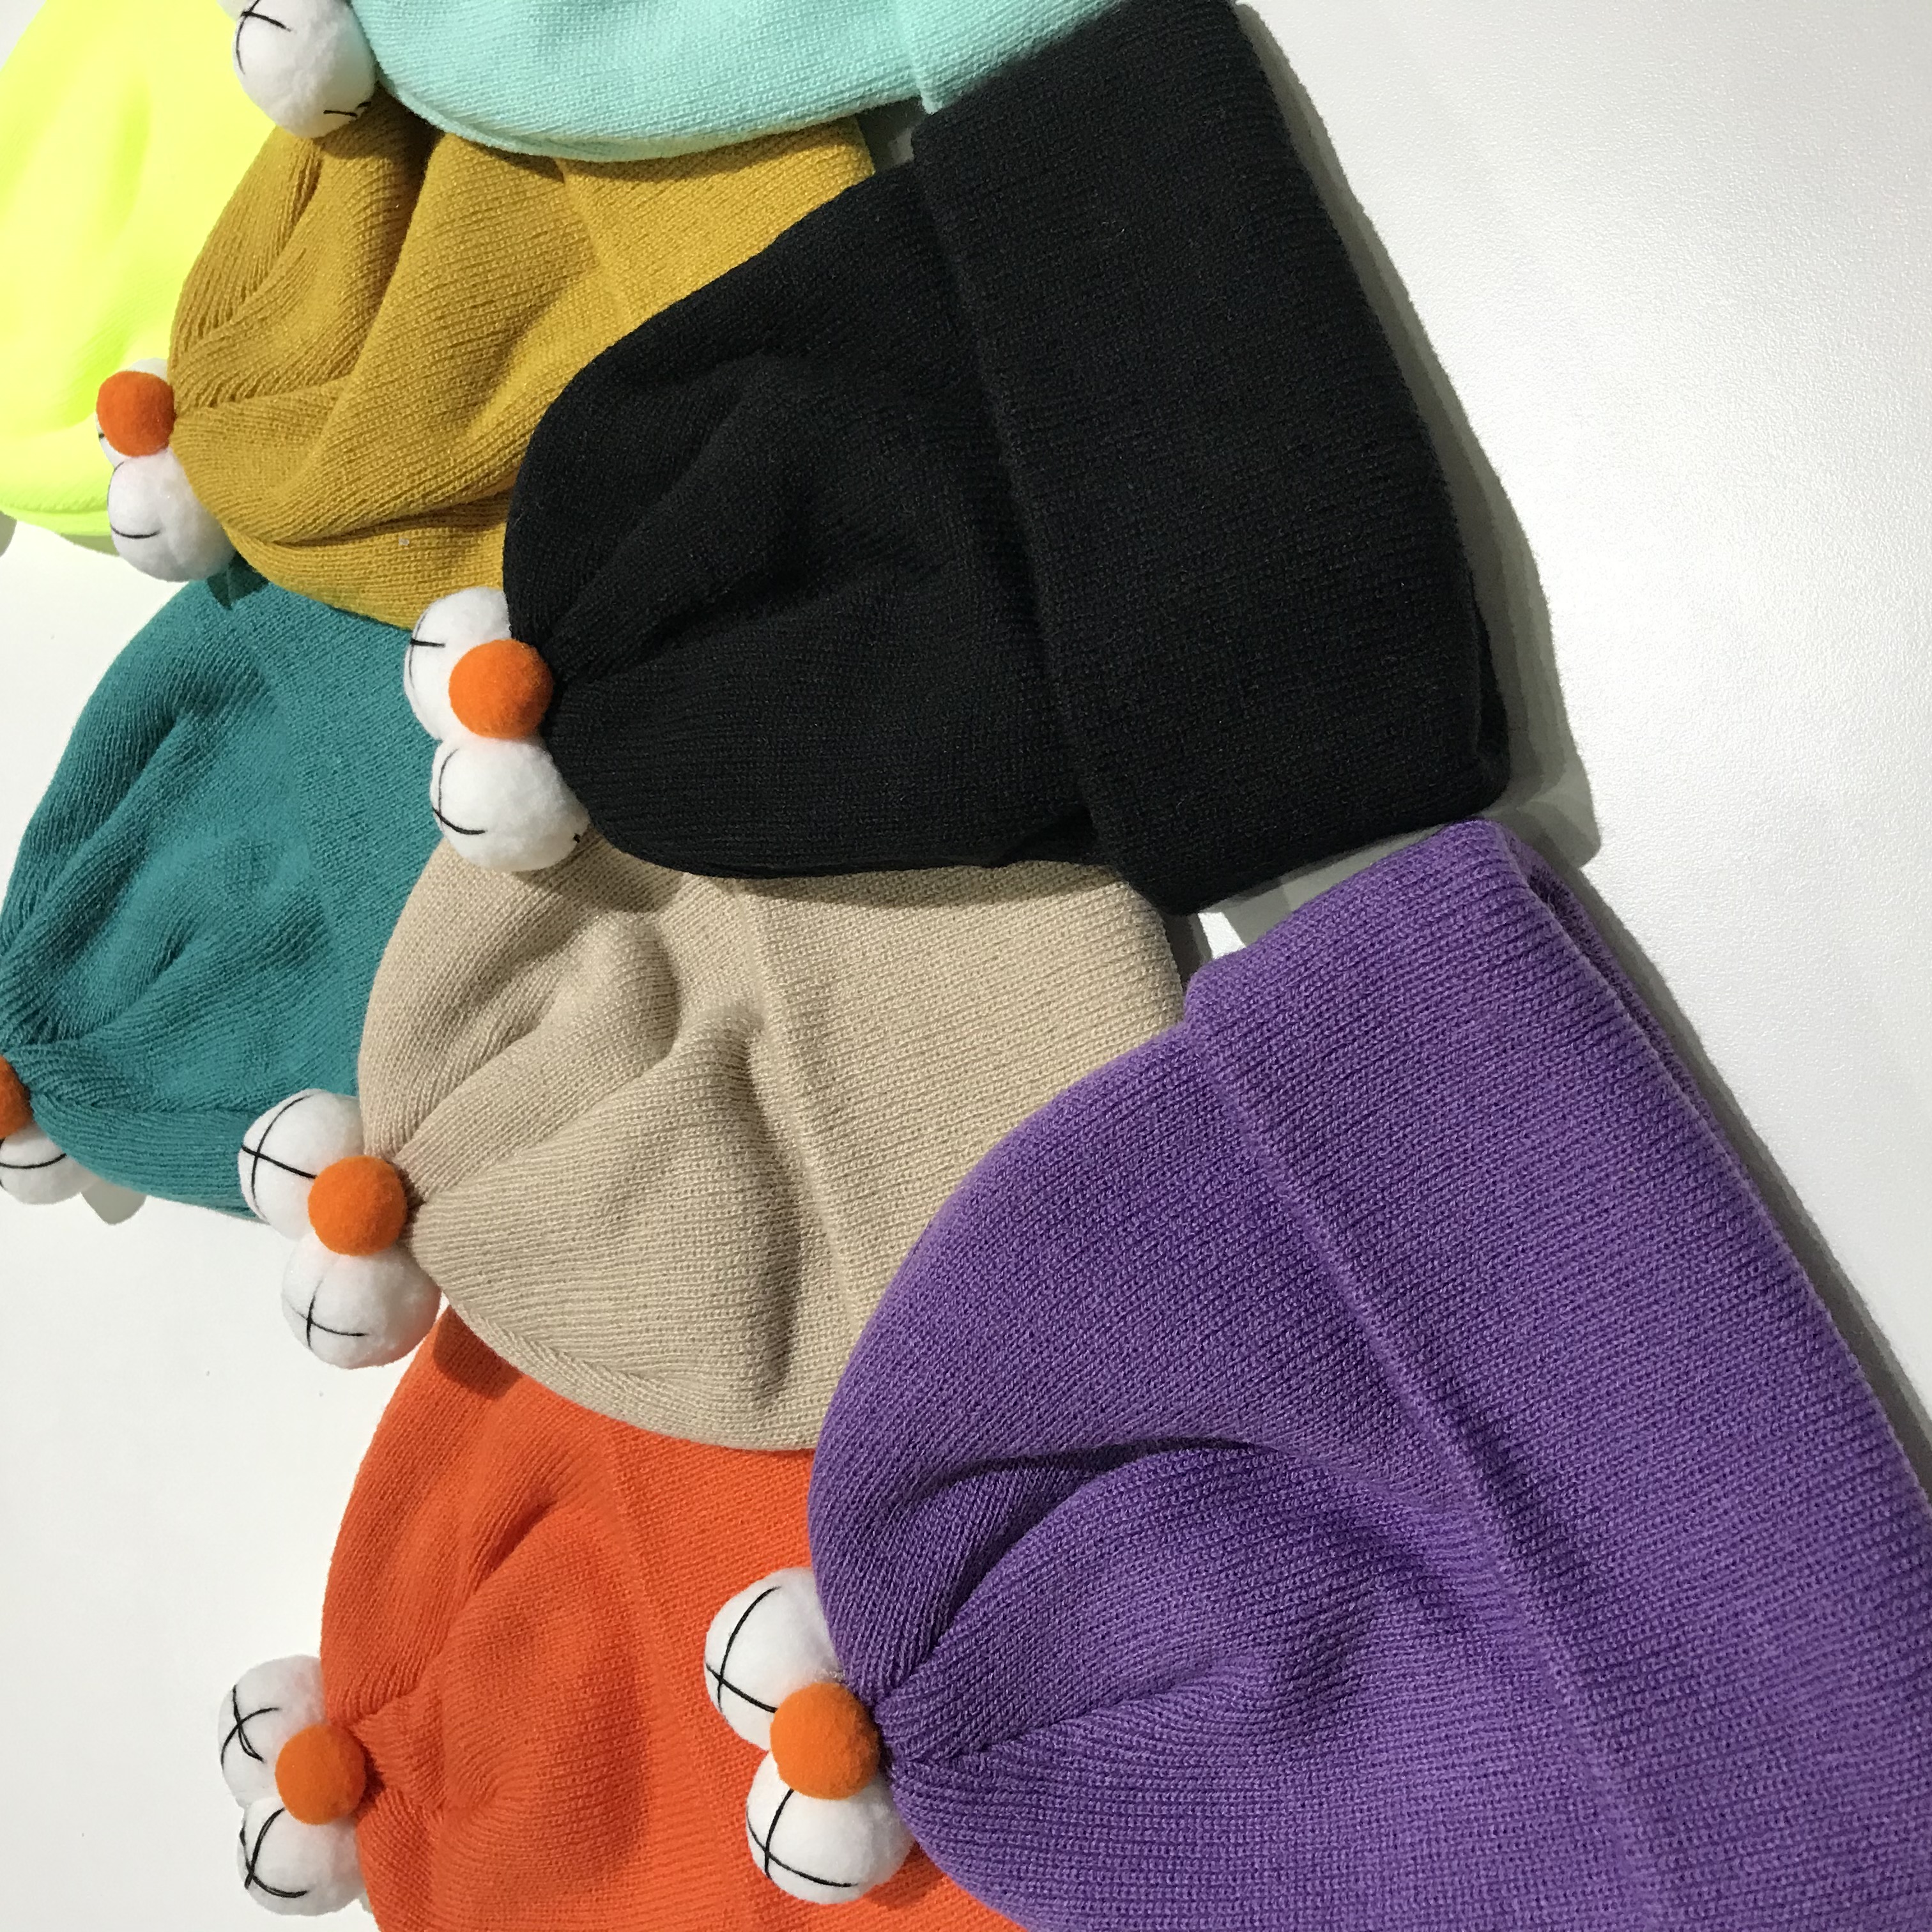 Mũ len đan Beanie hoạt hình - Nón len vintage mẫu mới